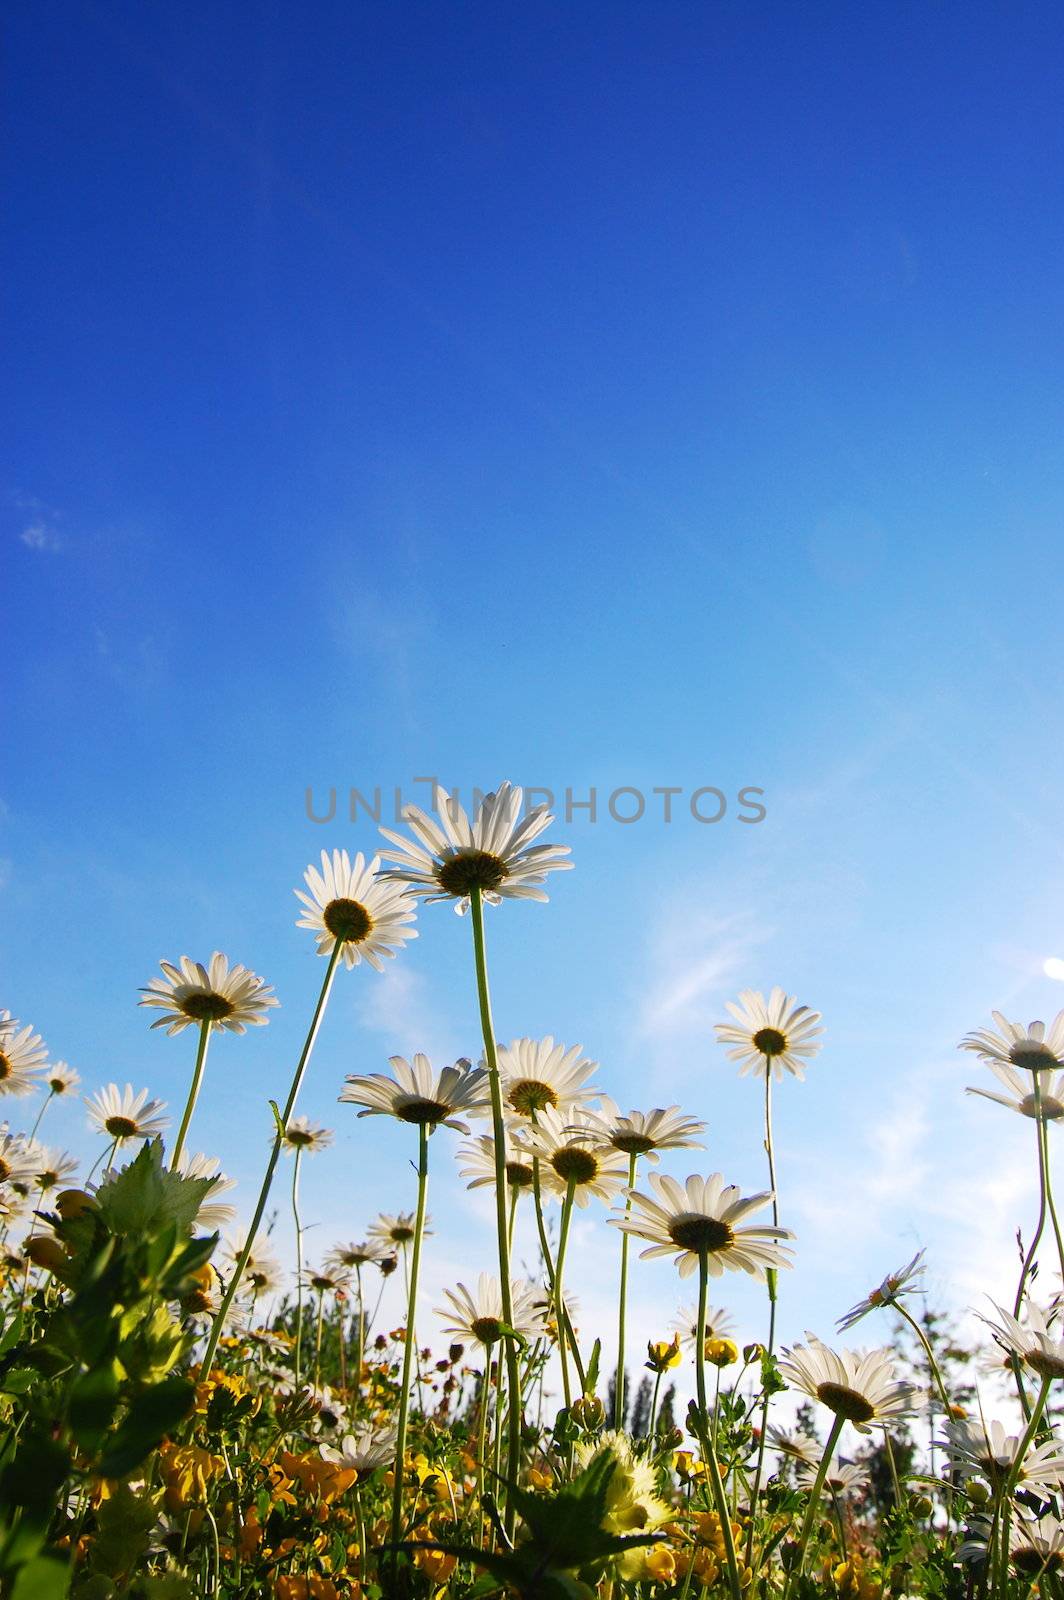 flower in summer under blue sky with copyspace